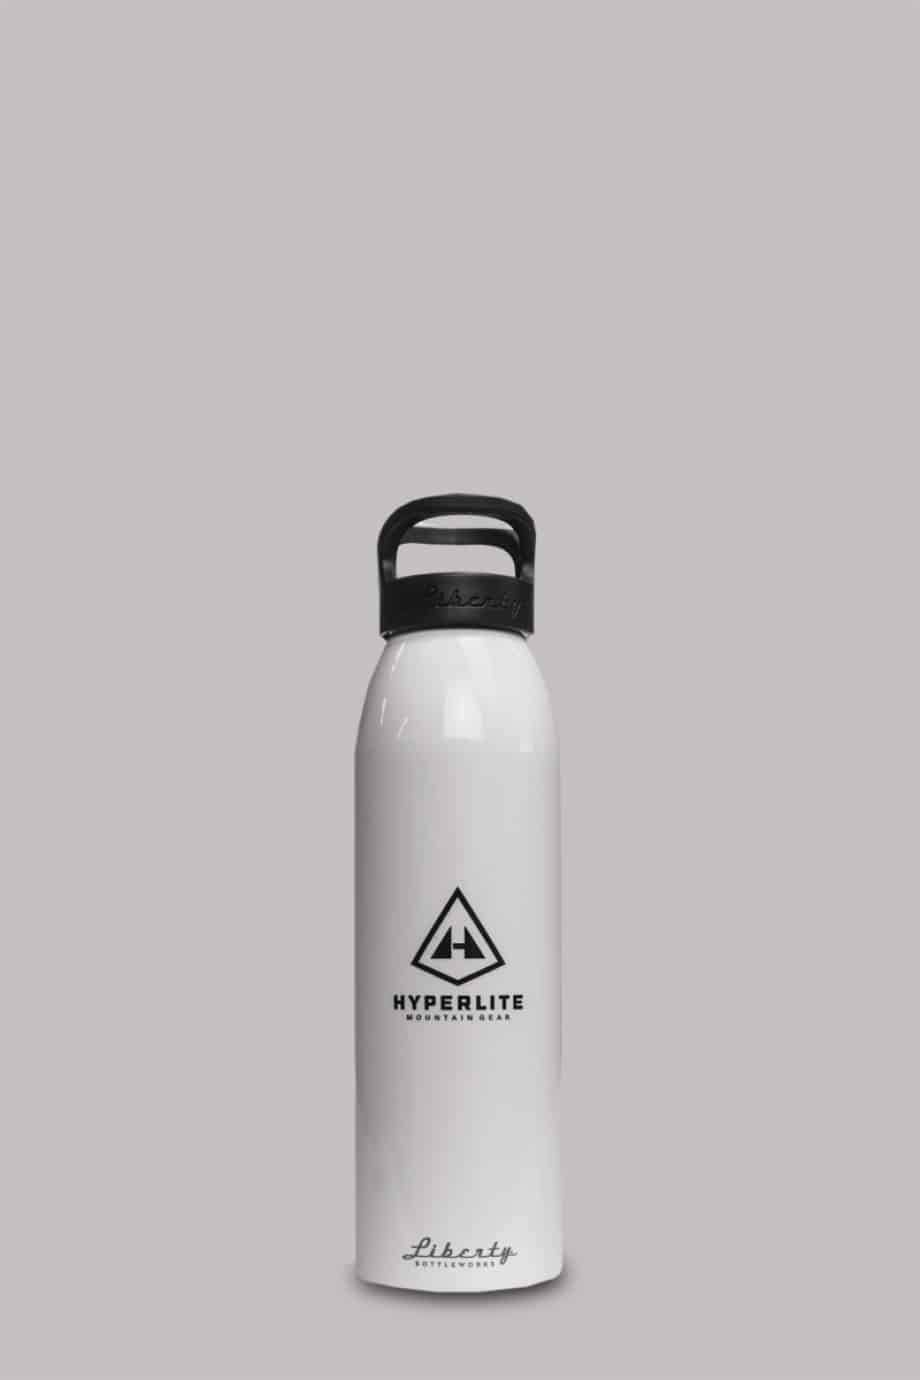 Hyperlite Mountain Gear REpurpose Bottle Review - Backpacking Light